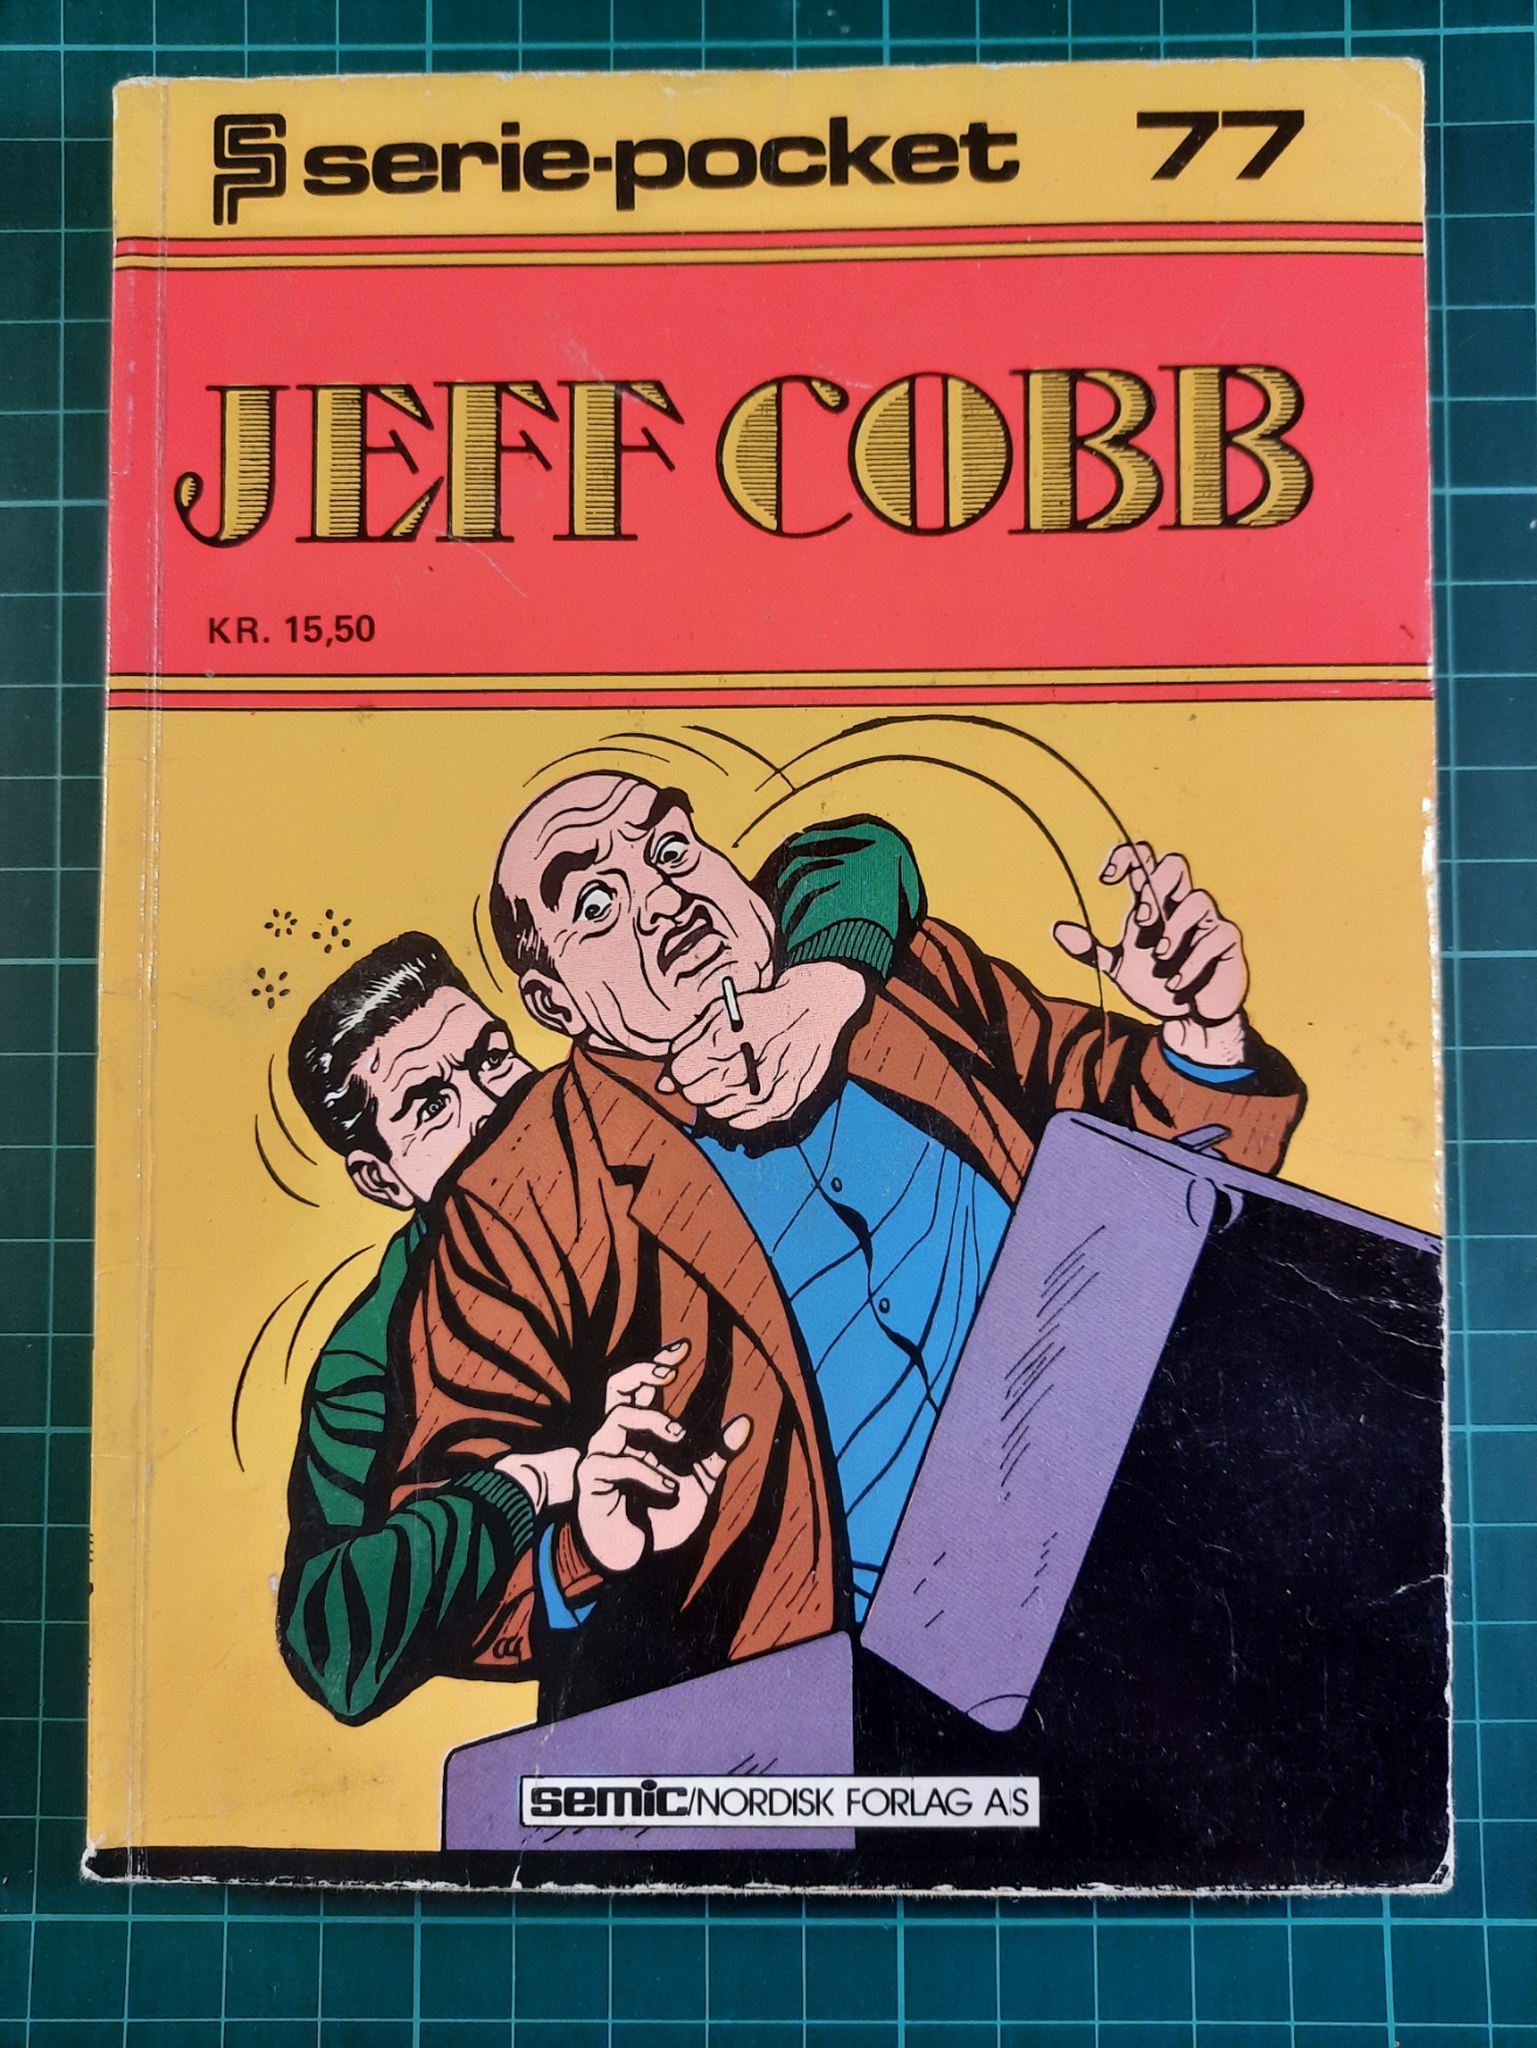 Serie-pocket 077 : Jeff Cobb